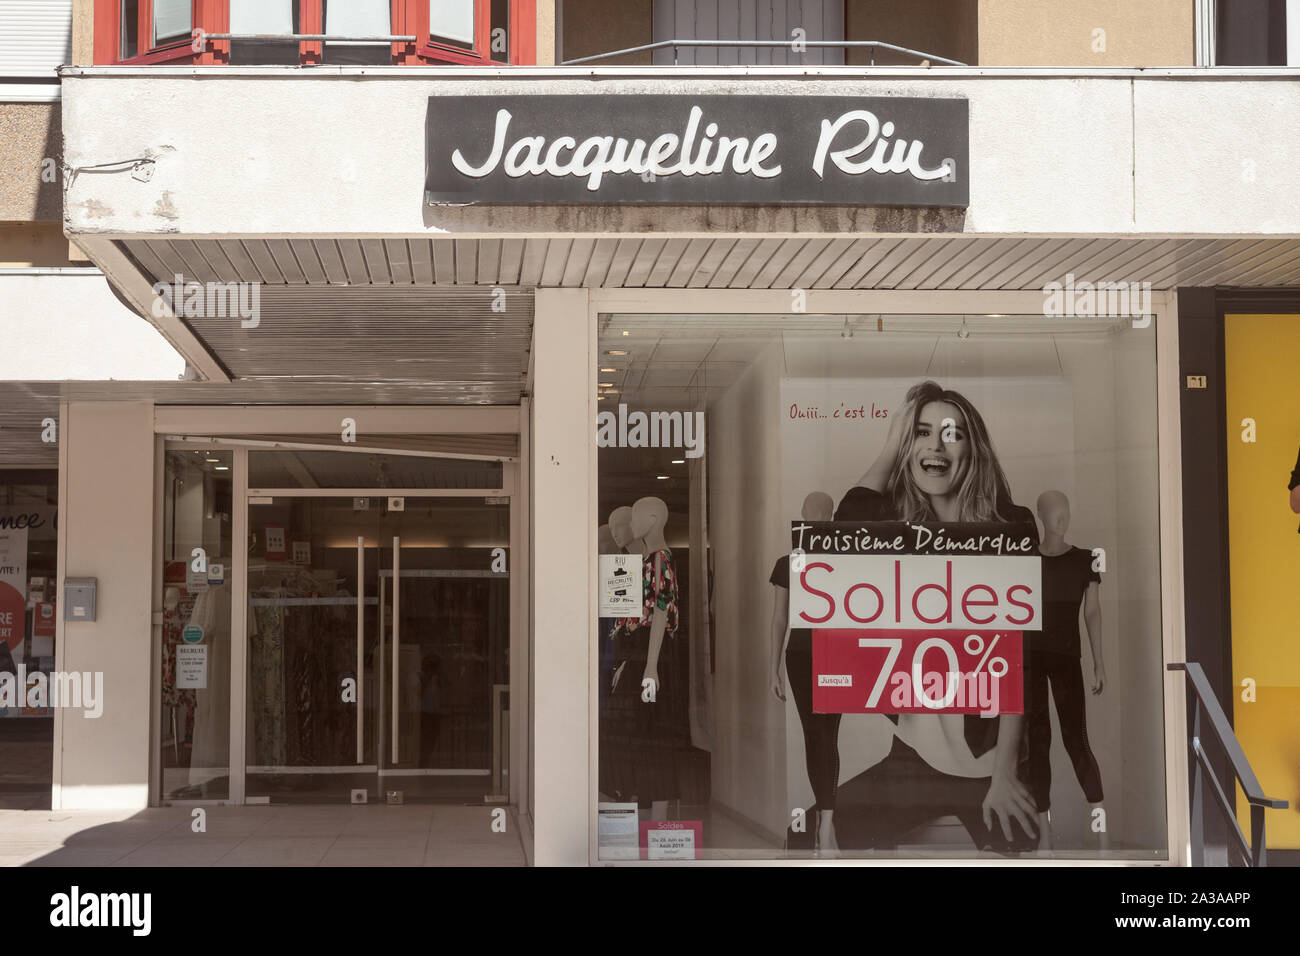 Soldes Jacqueline Riu Store, GET 56% OFF, www.islandcrematorium.ie